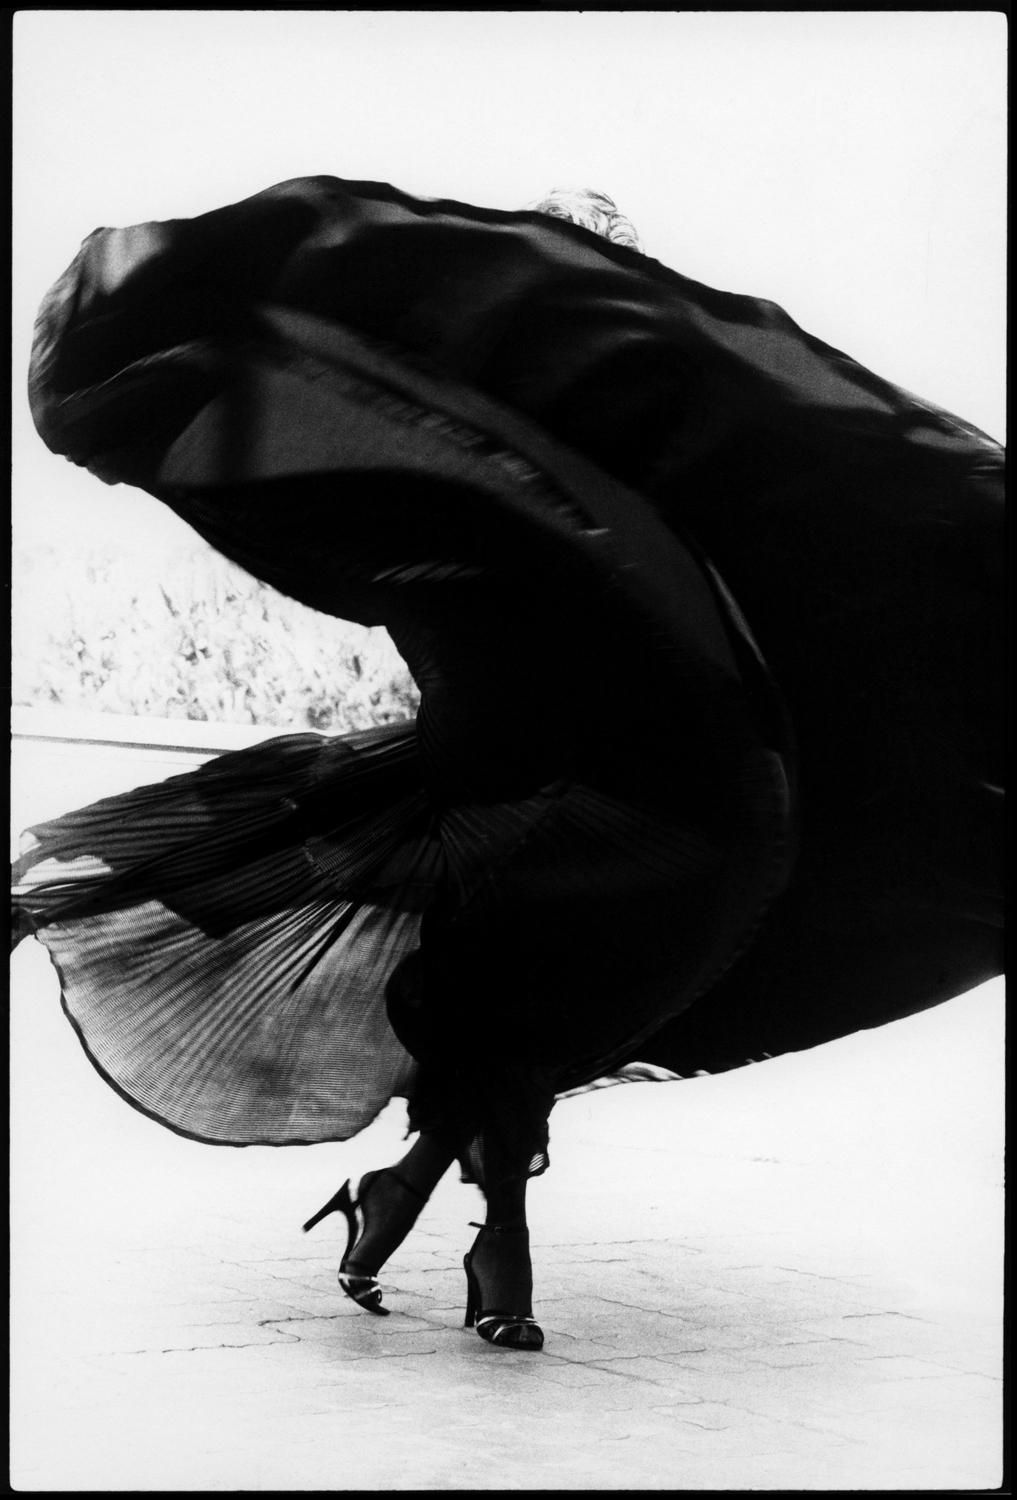 Arthur Elgort Black and White Photograph – Shaun Casey, Italienischer Harper's Bazaar, 1978